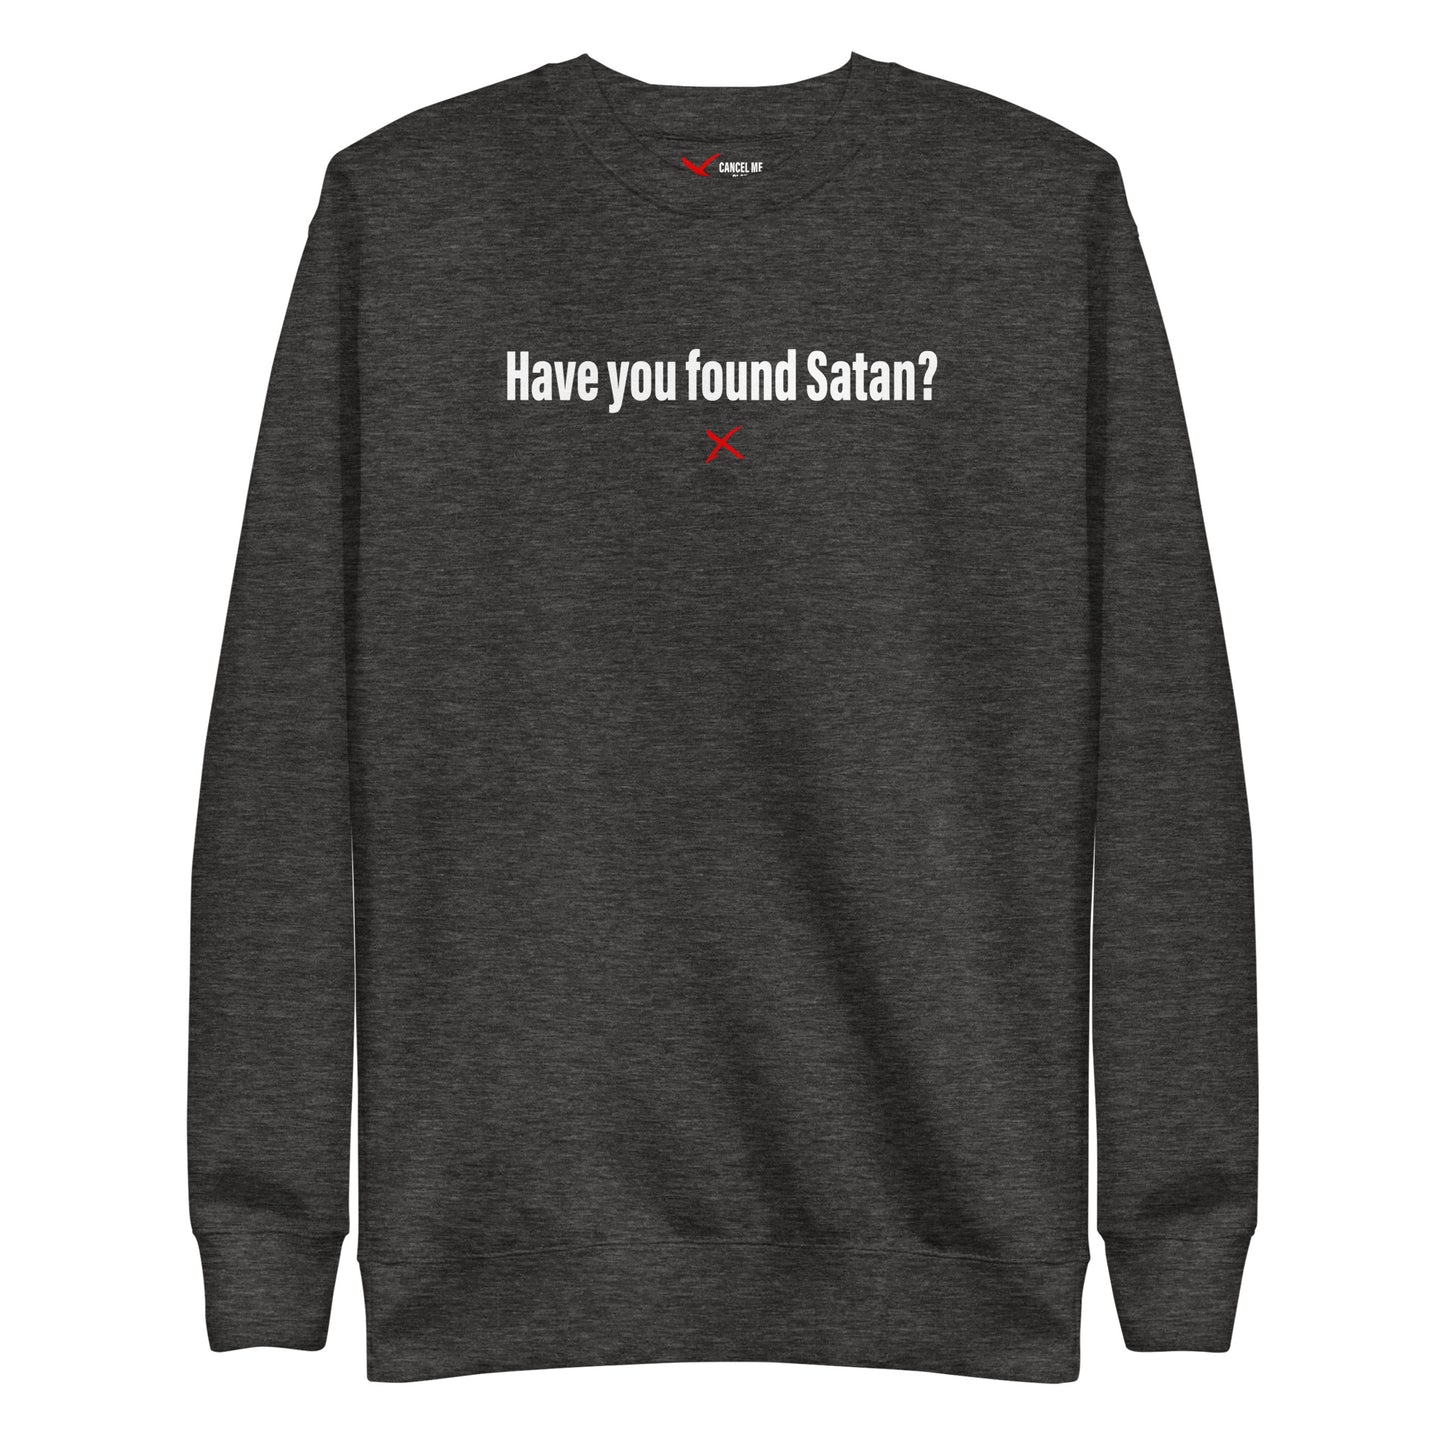 Have you found Satan? - Sweatshirt